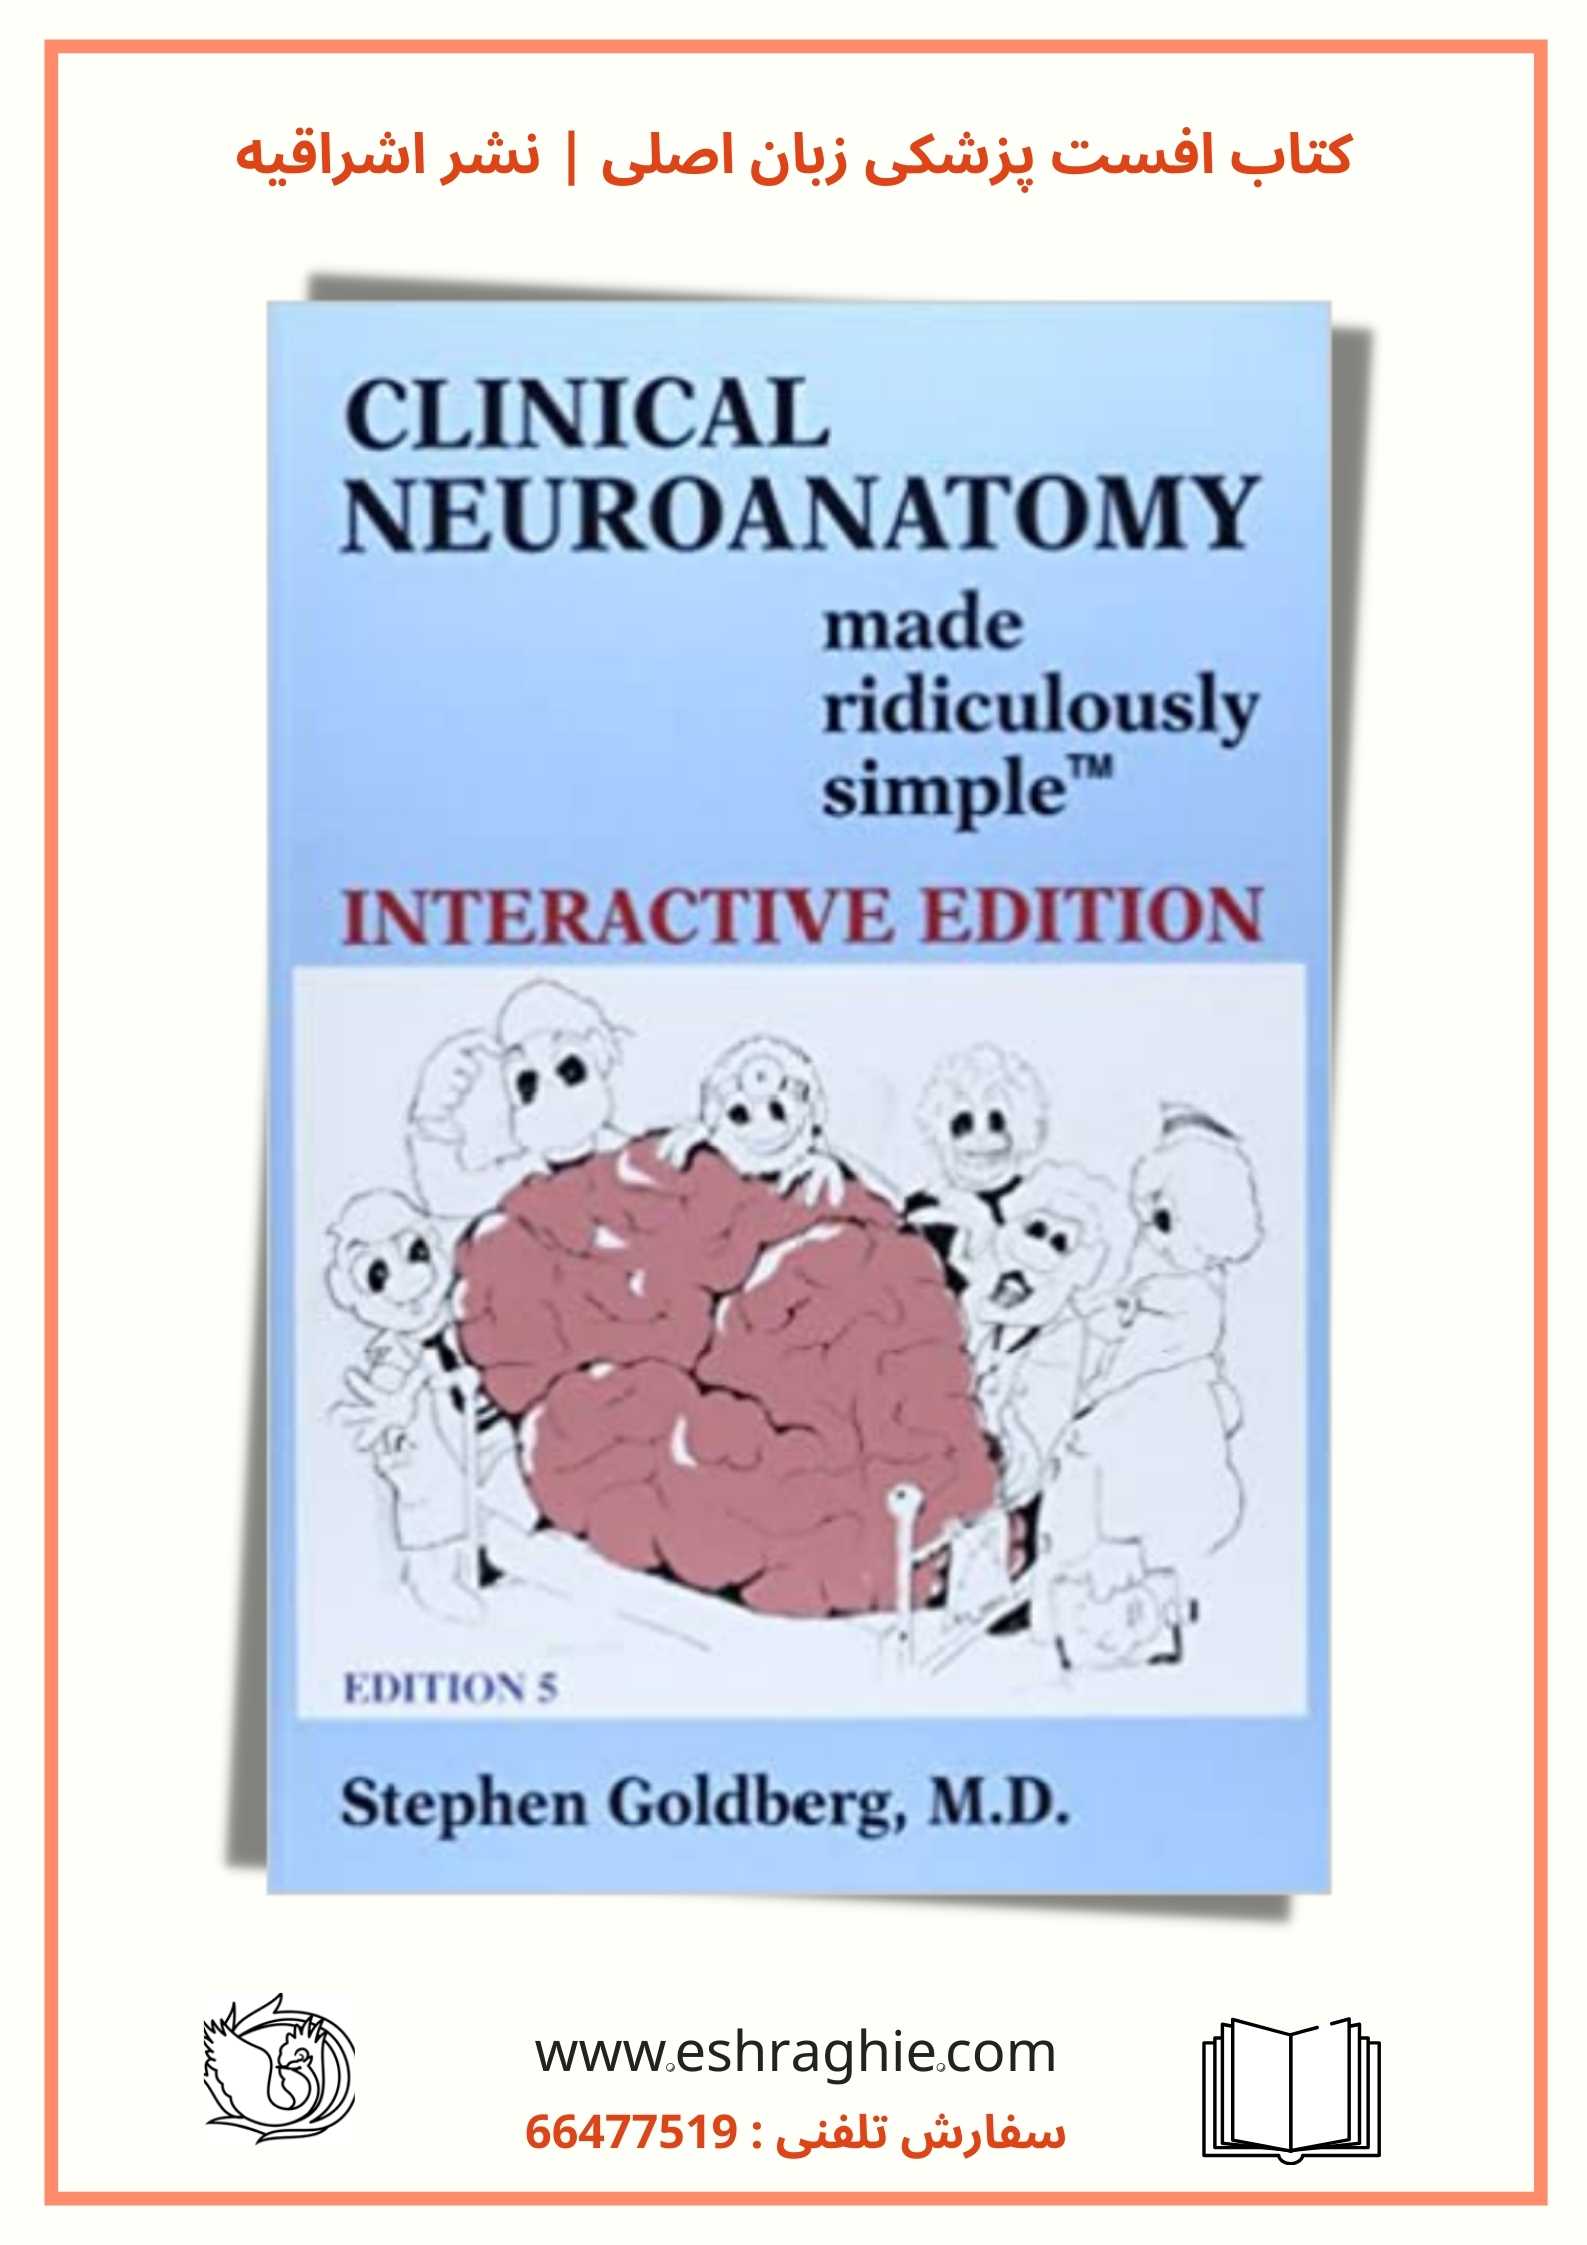 Clinical Neuroanatomy made ridiculously simple | 5th Edition - 2016